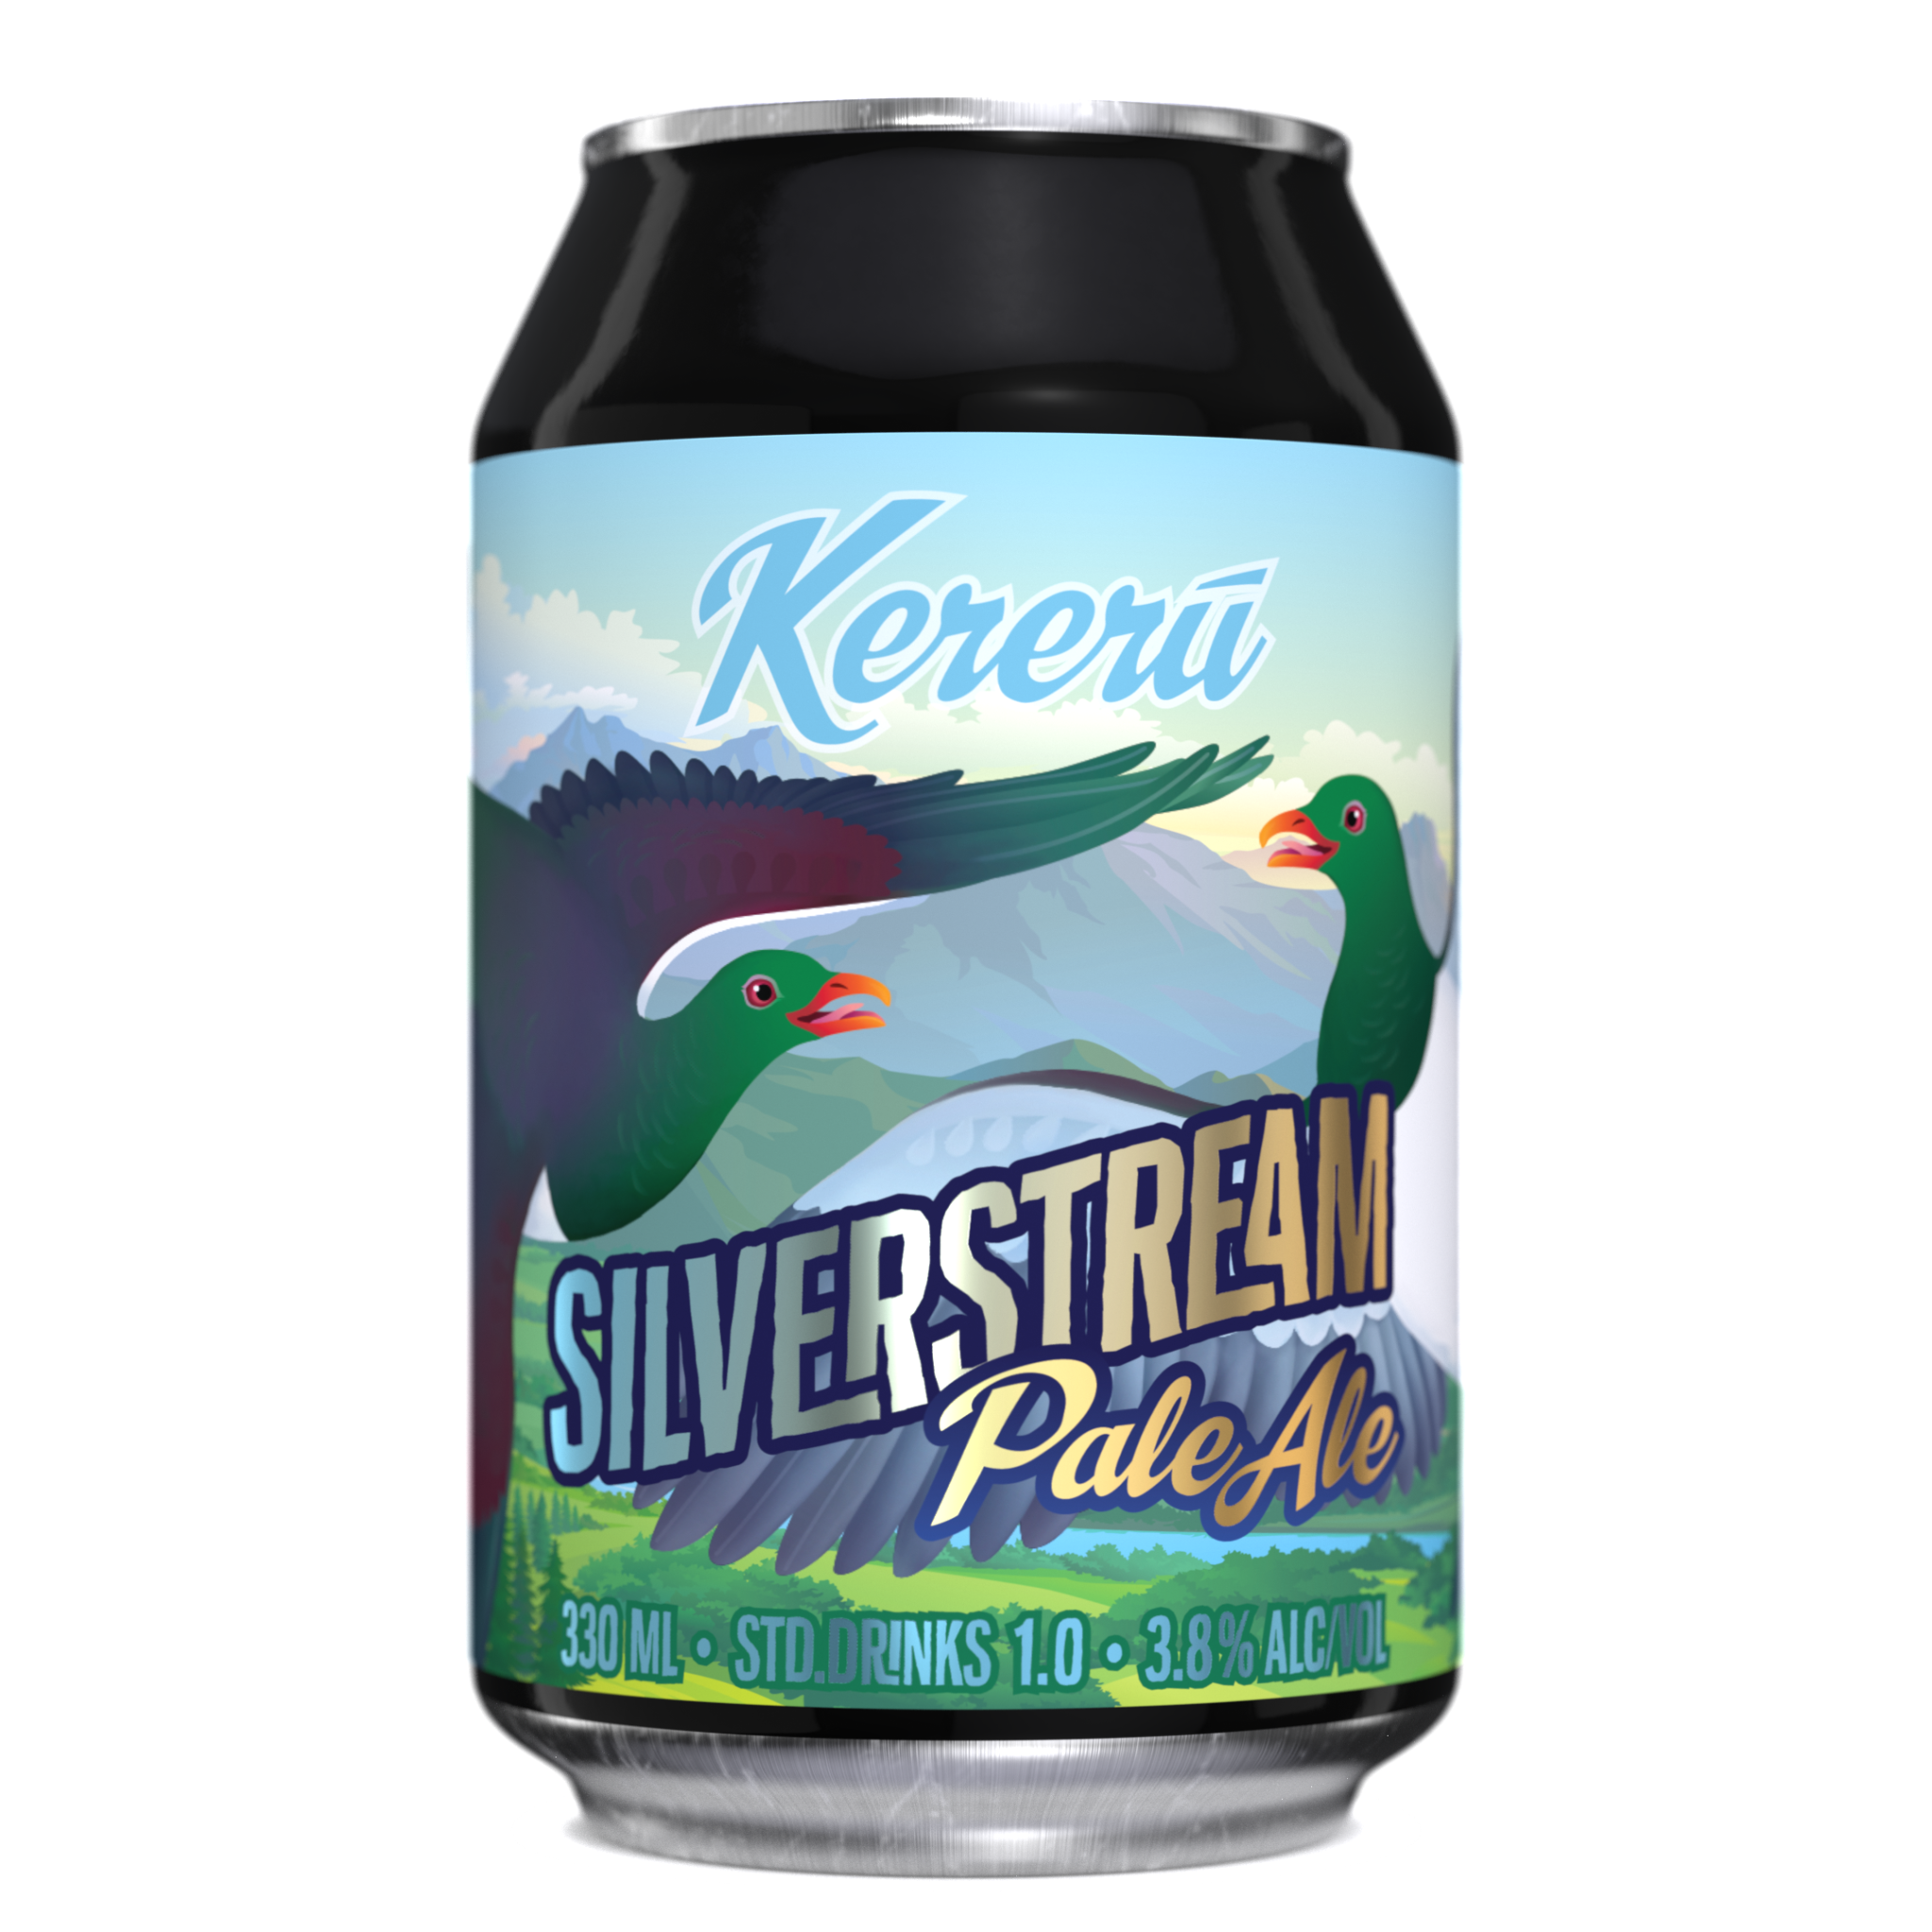 Silverstream Pale Ale